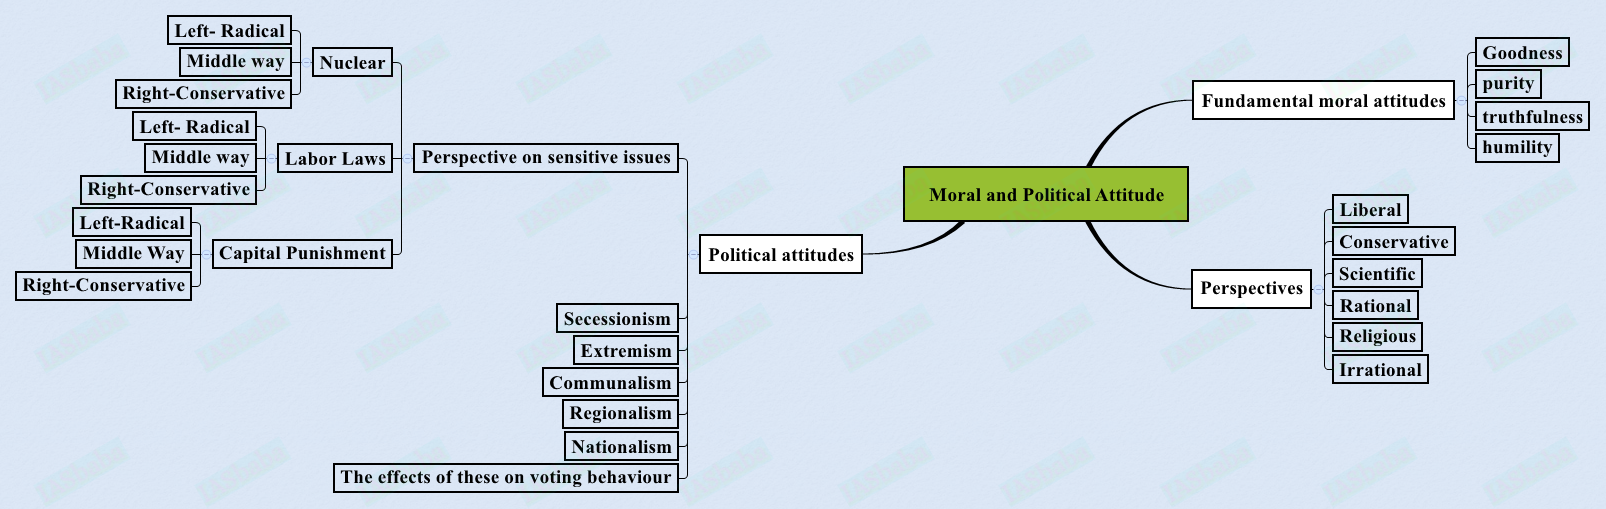 Moral and Political Attitude